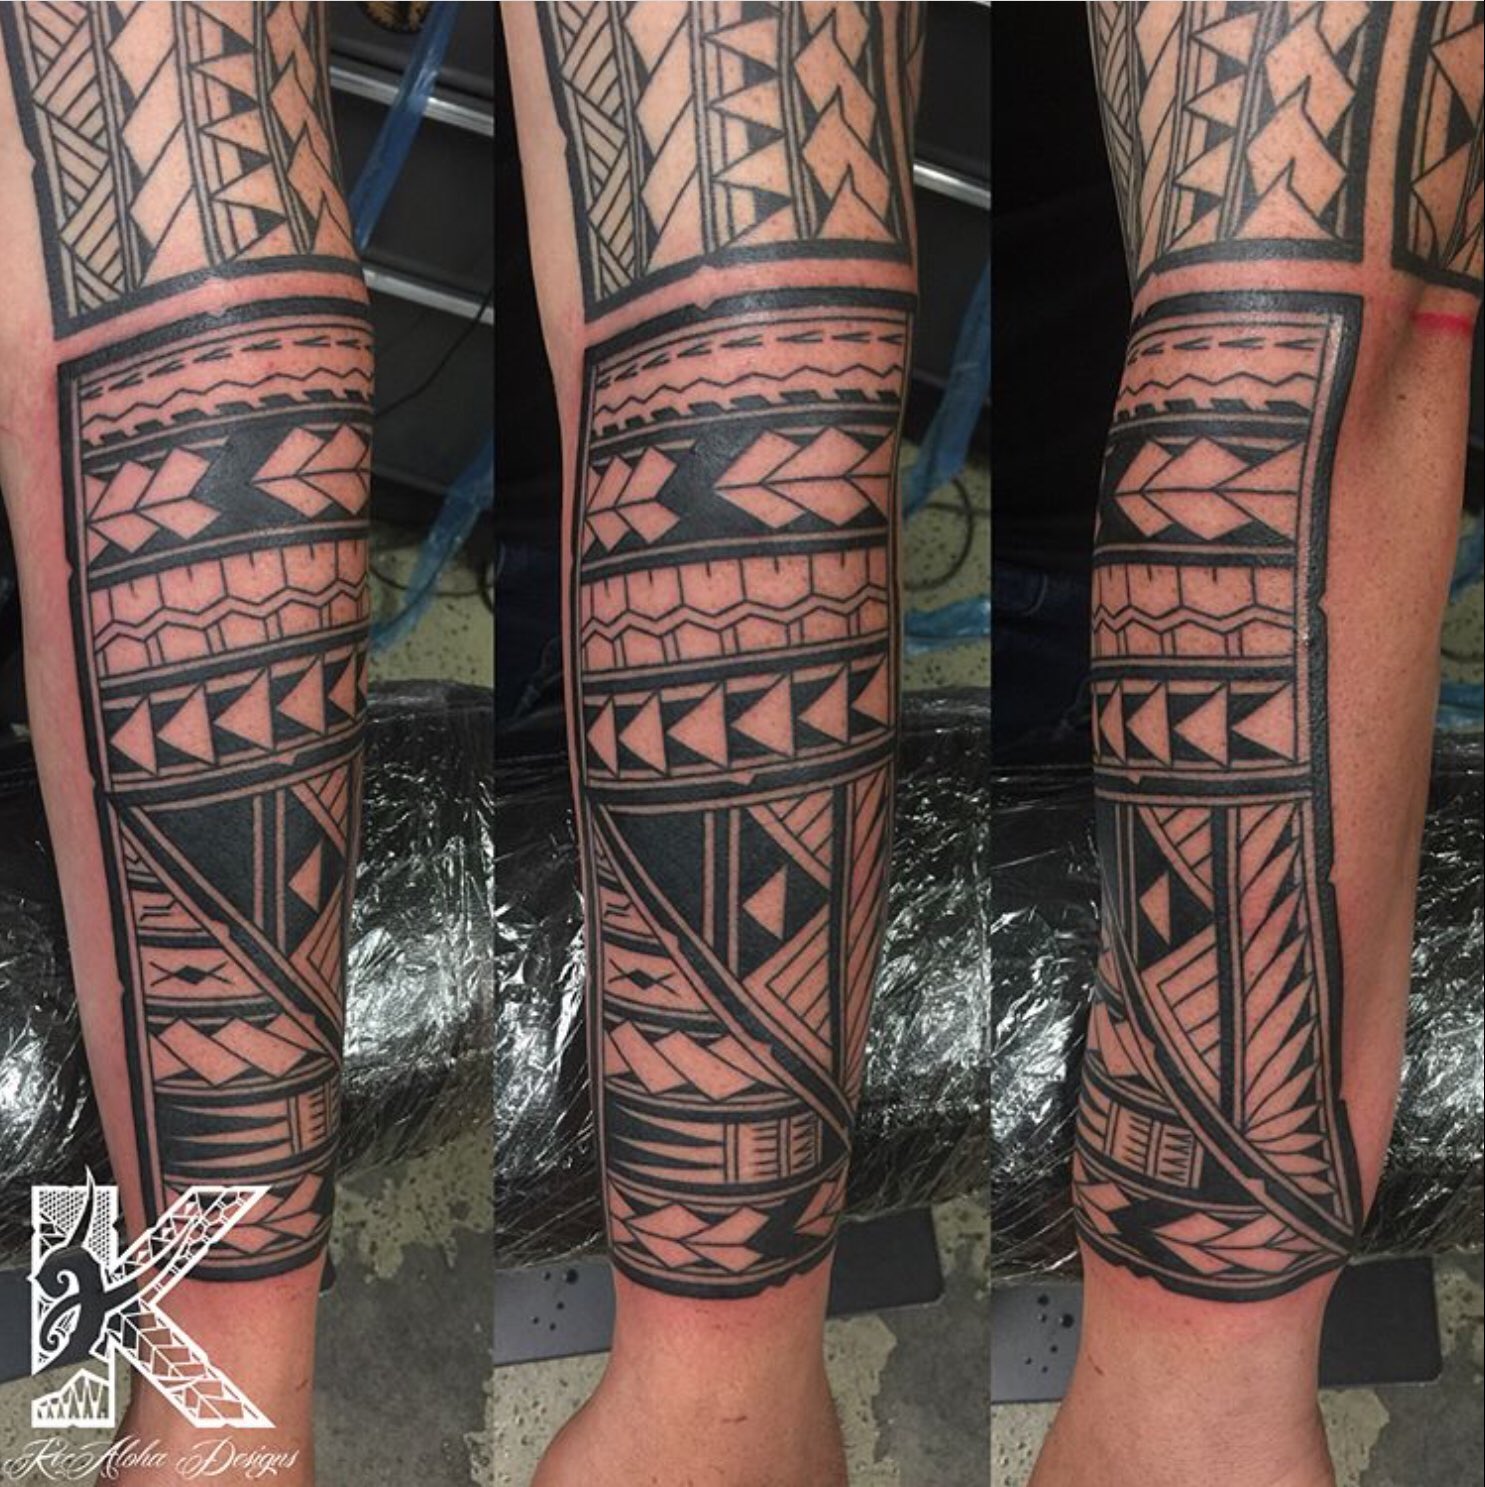 Tattoo uploaded by Mark Klavs tattoo • Forearm tattoo sleeve